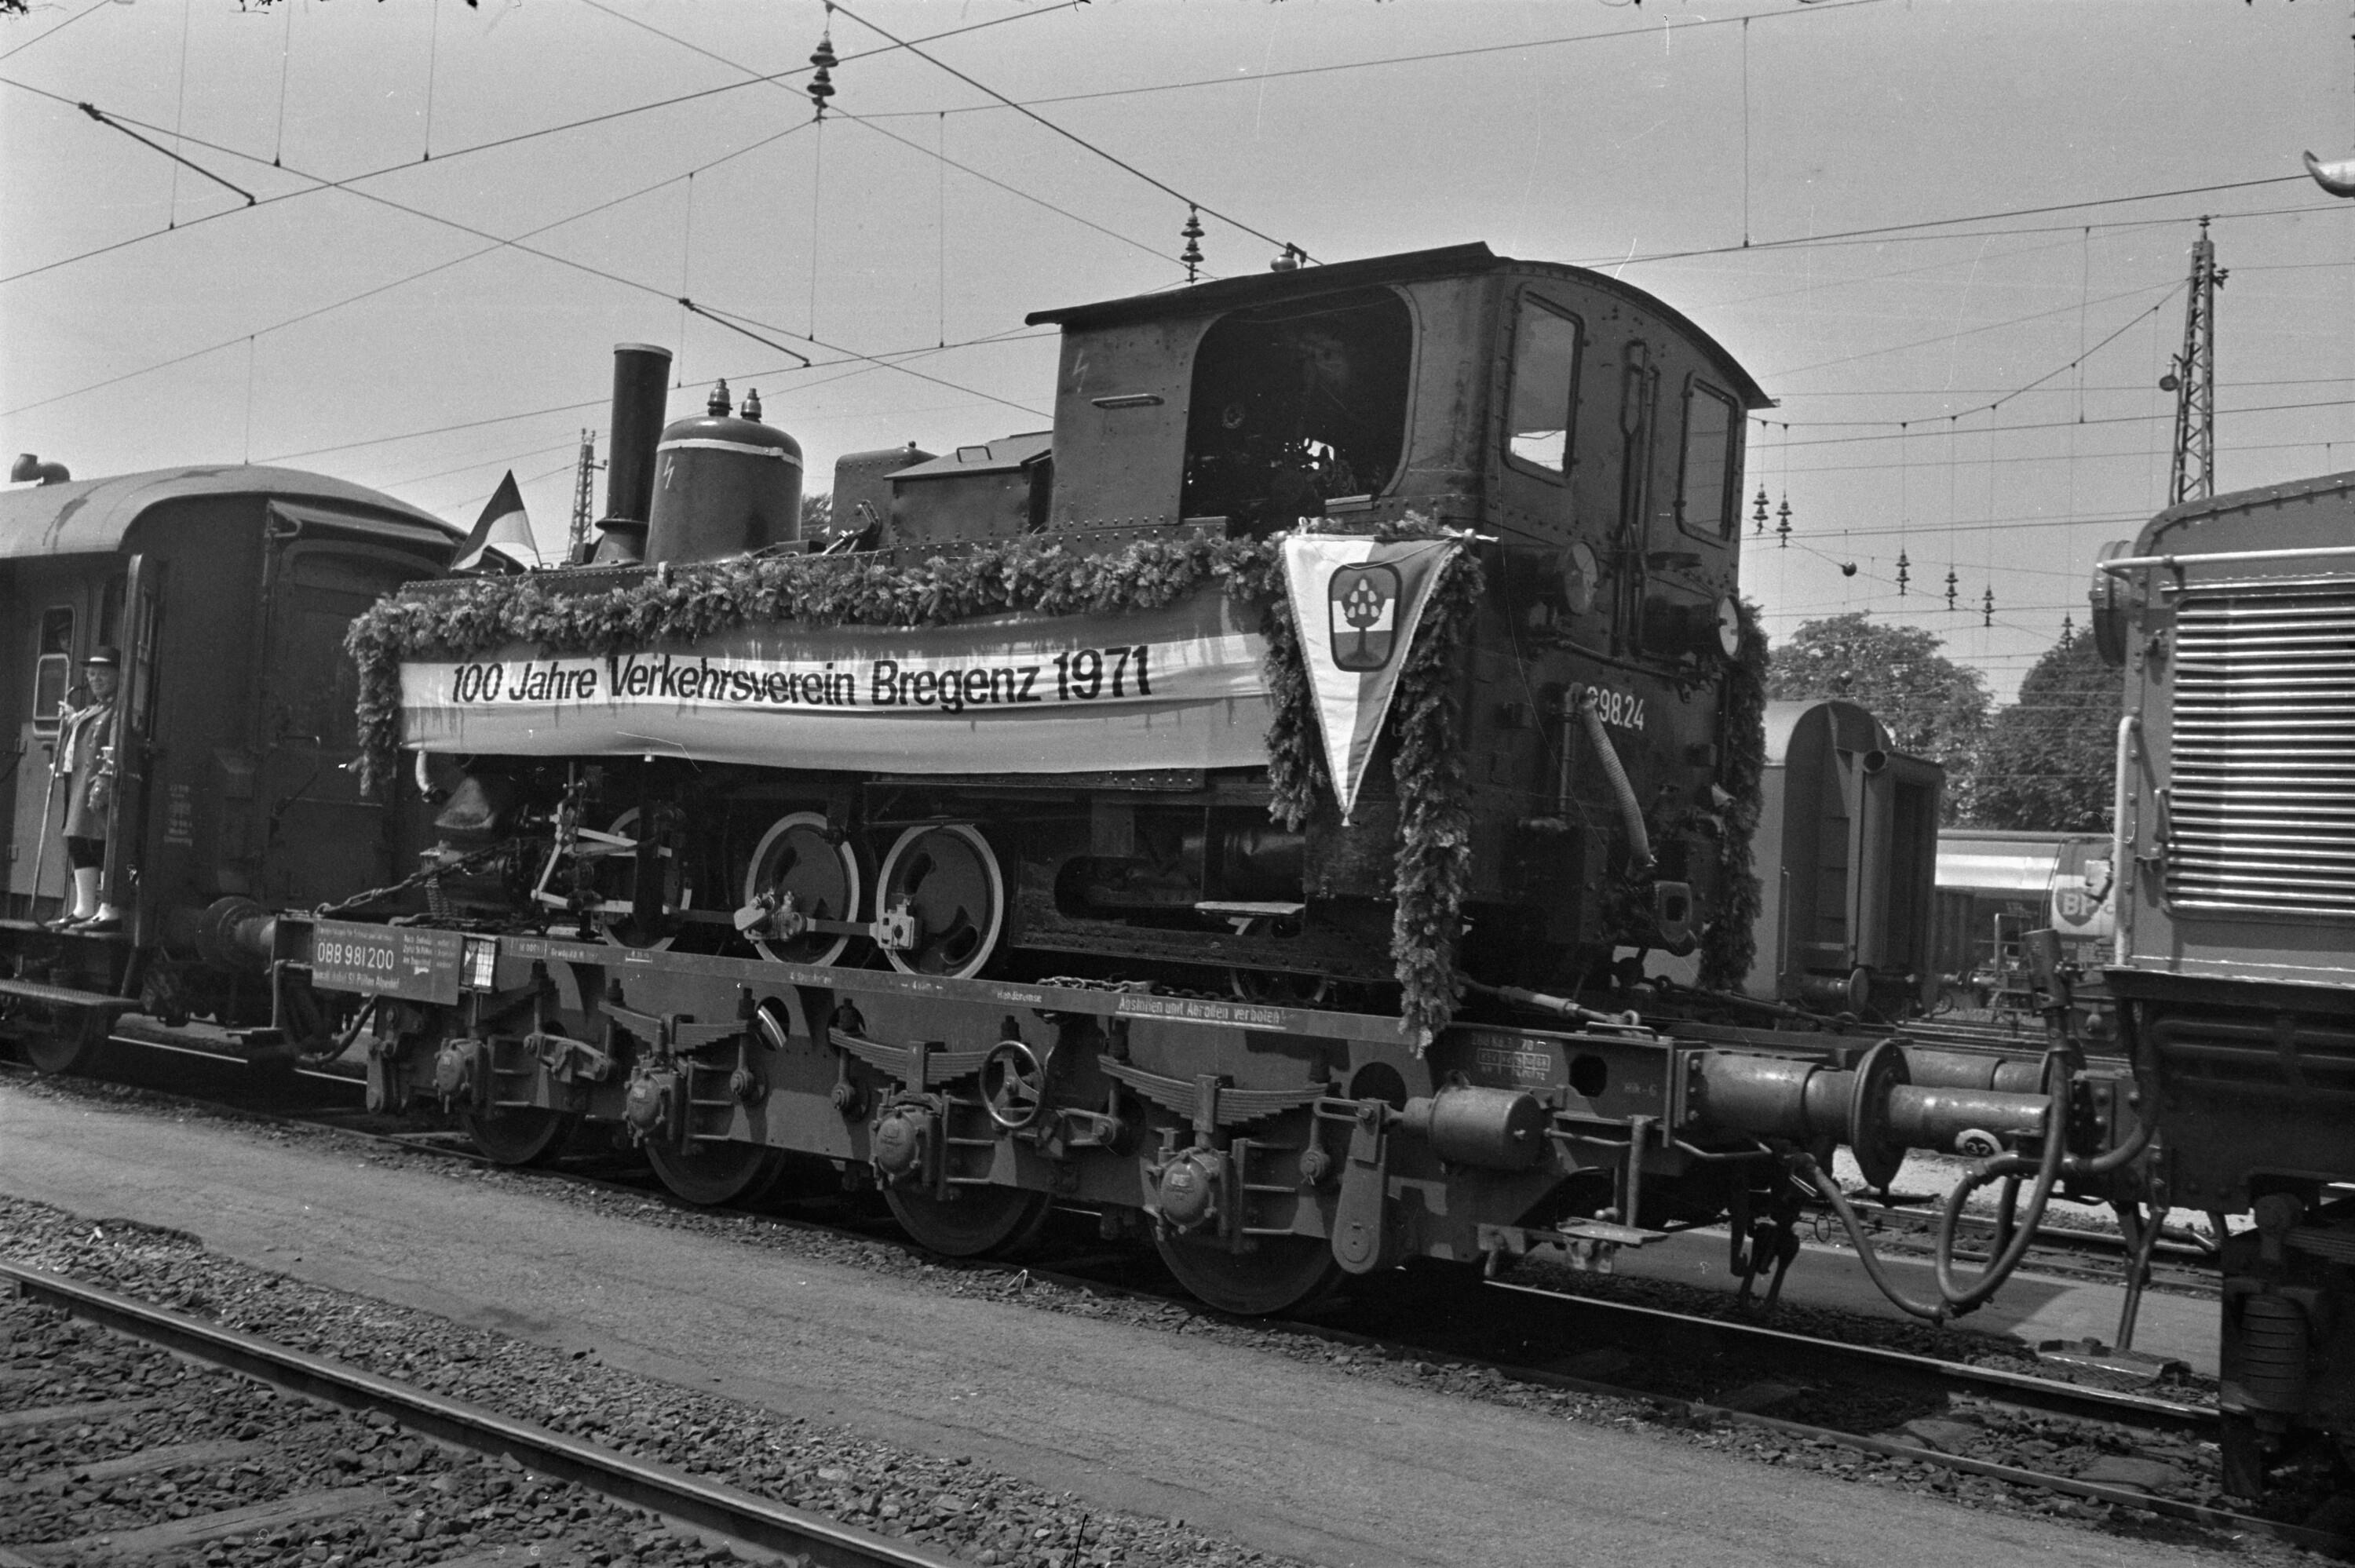 100 Jahre Verkehrsverein in Bregenz - geschmückte Lokomotive></div>


    <hr>
    <div class=